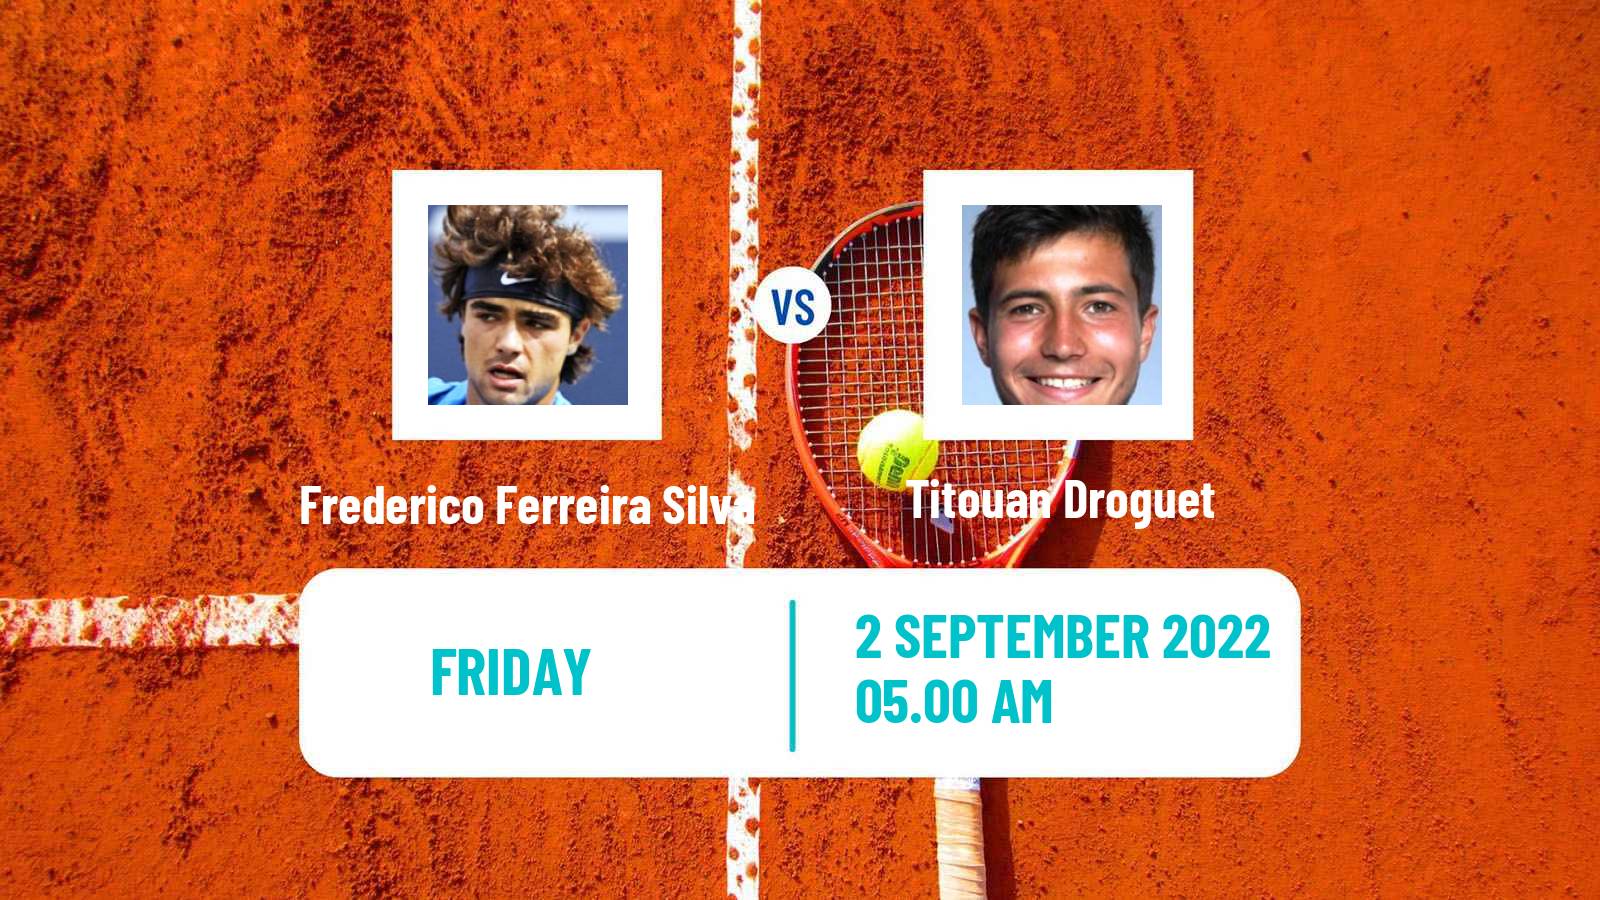 Tennis ATP Challenger Frederico Ferreira Silva - Titouan Droguet